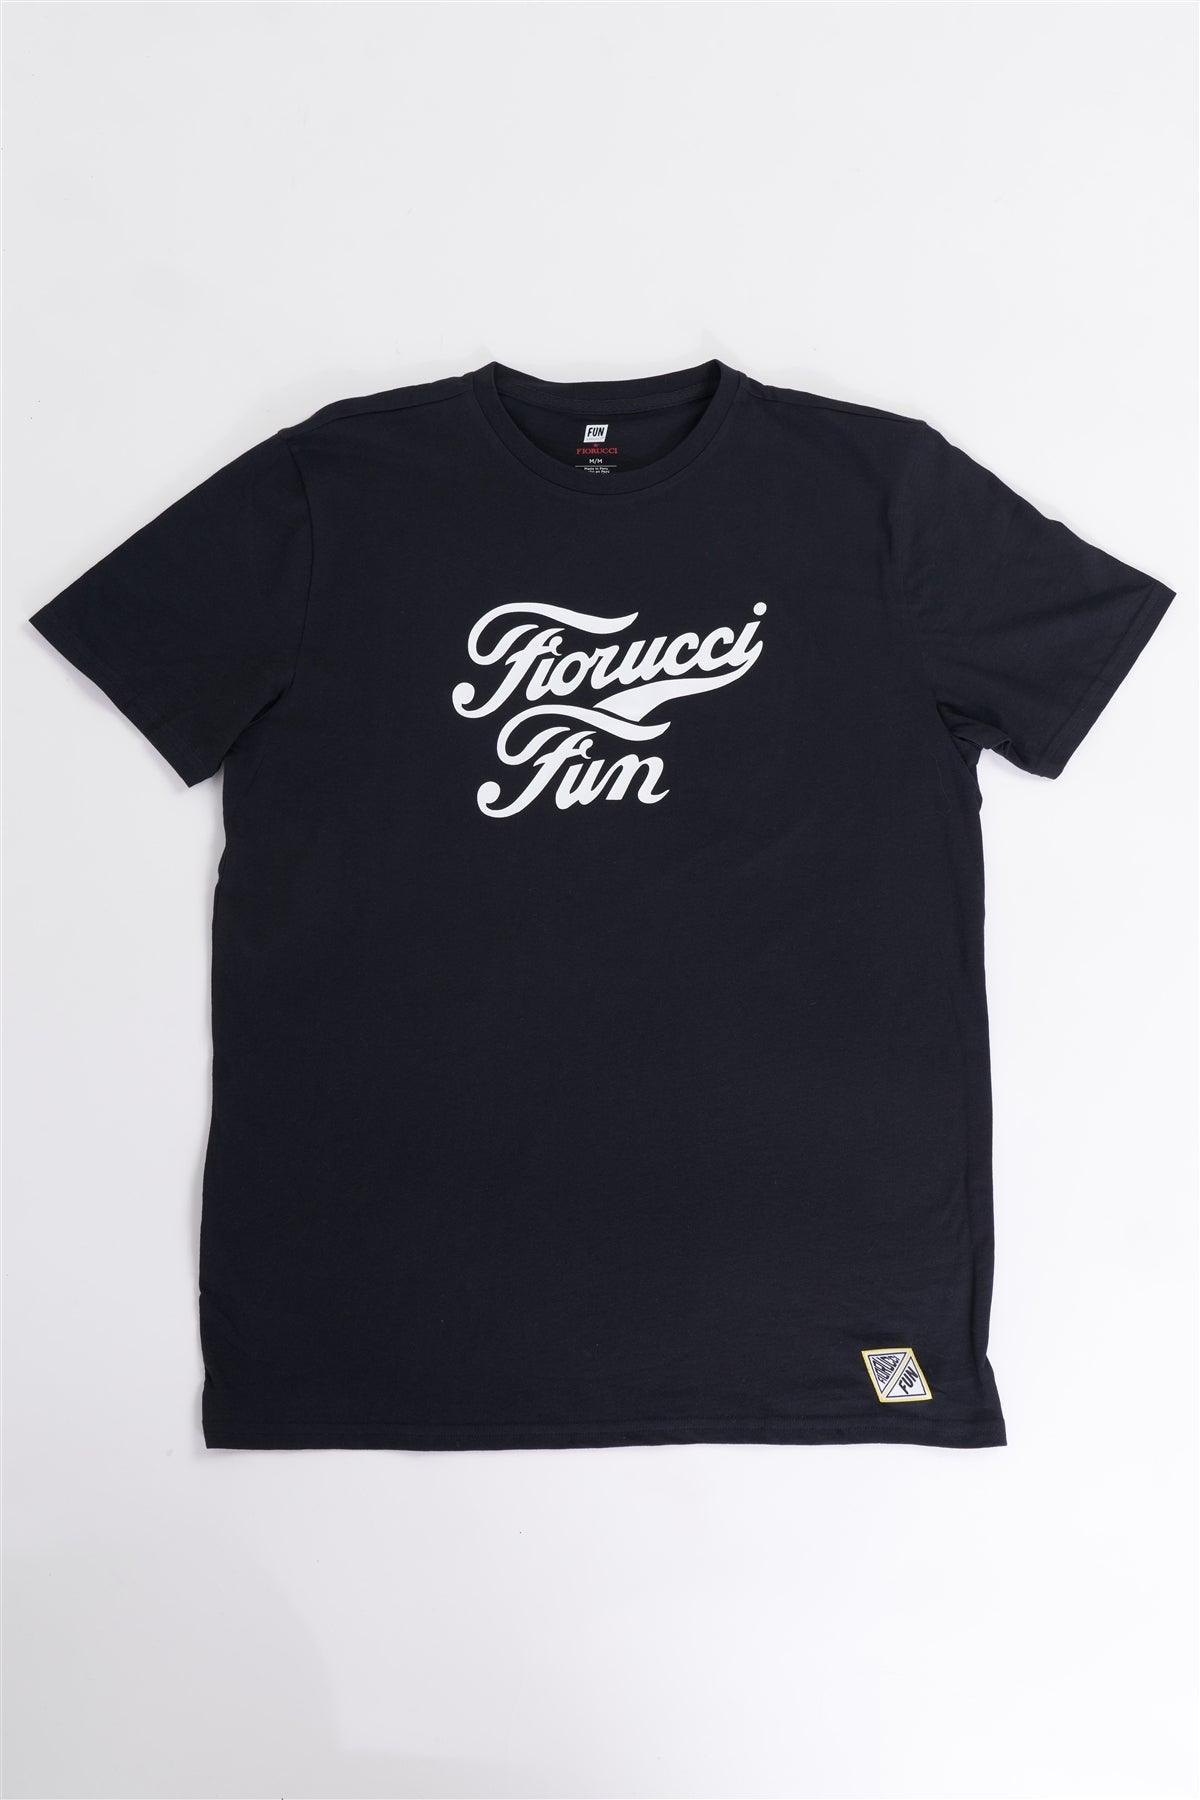 Fiorucci Fun Men's Black & White Printed Logo T-Shirt For Him /2-2-2